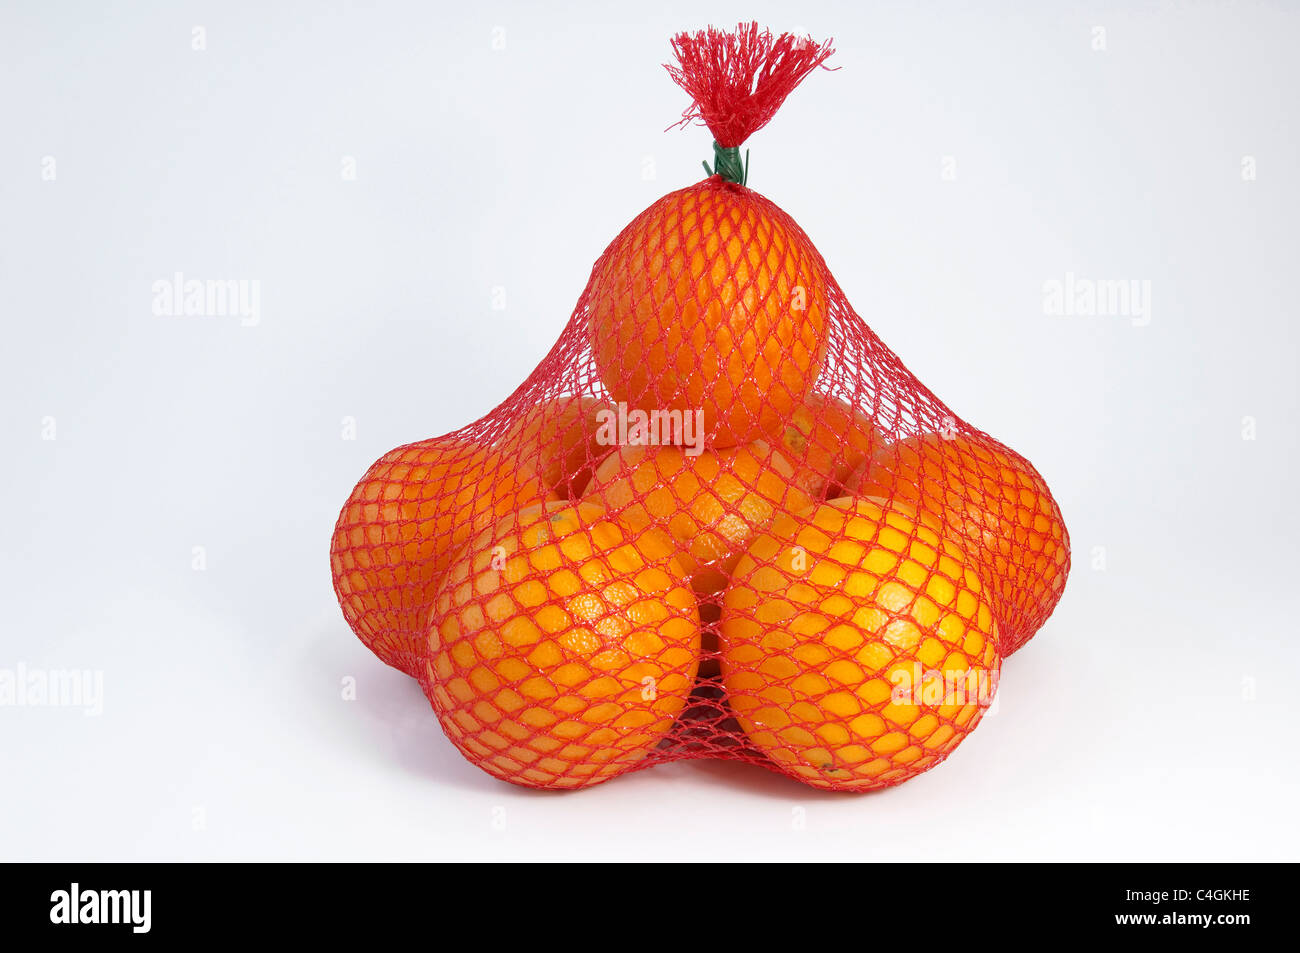 Naranja (Citrus sinensis), fruta en una red. Studio picture contra un fondo blanco. Foto de stock